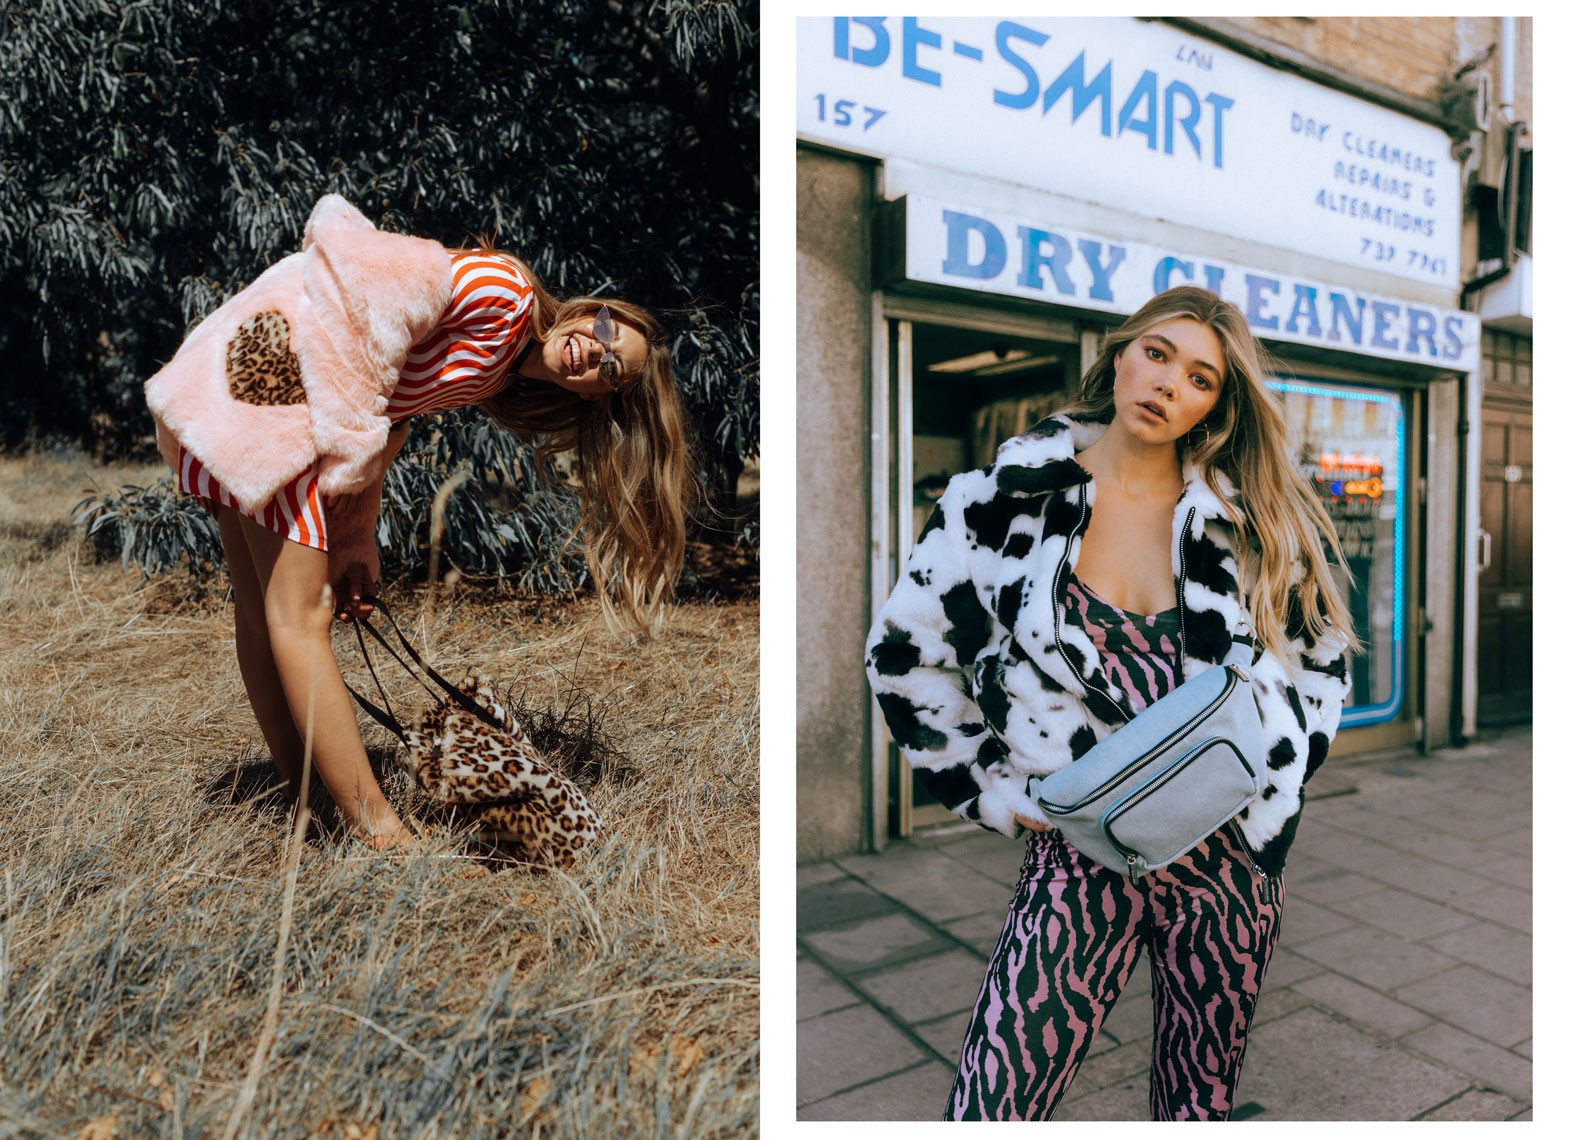 issie-gibbons-fashion-stylist-skinnydip-london-campaign-house-of-holland-zebra-leopard